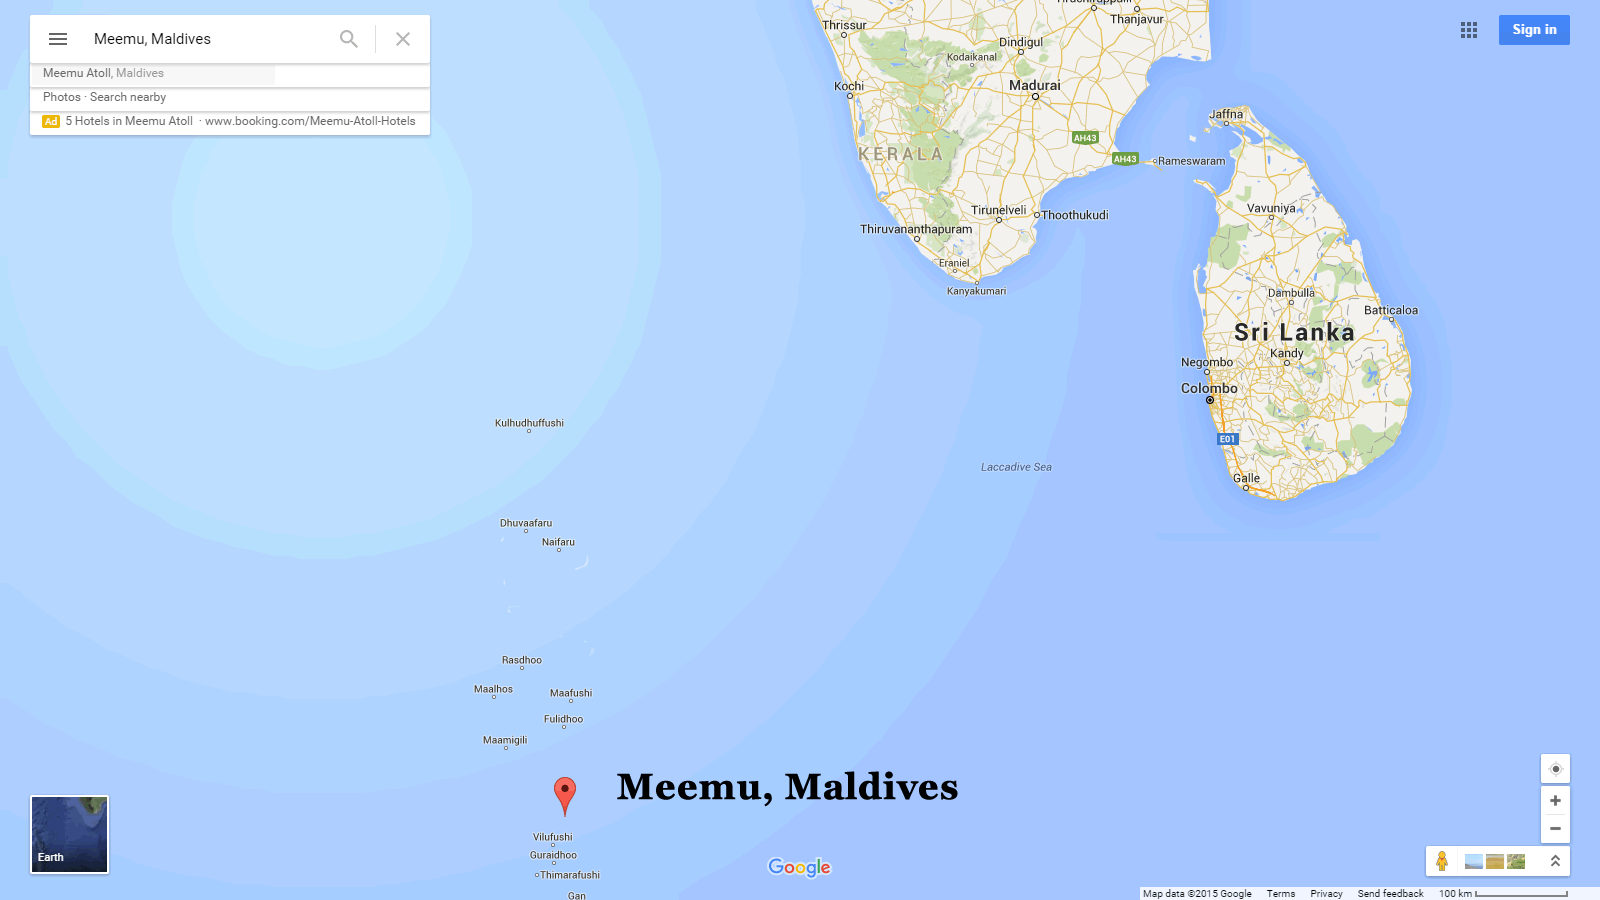 where is meemu maldives